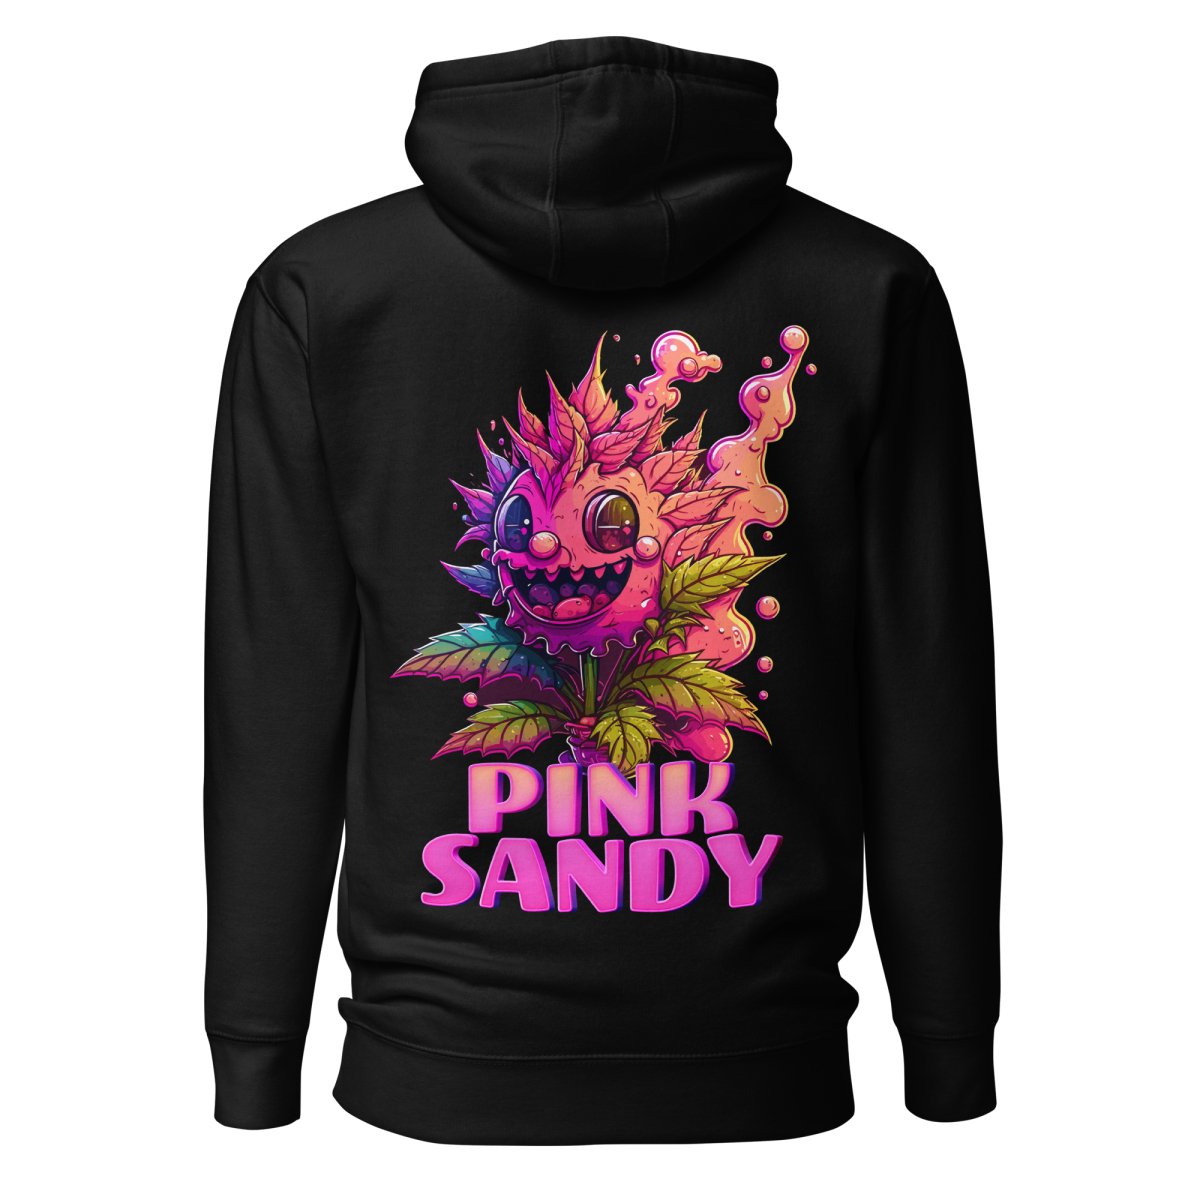 Pink Sandy Hoodie - Mainly High